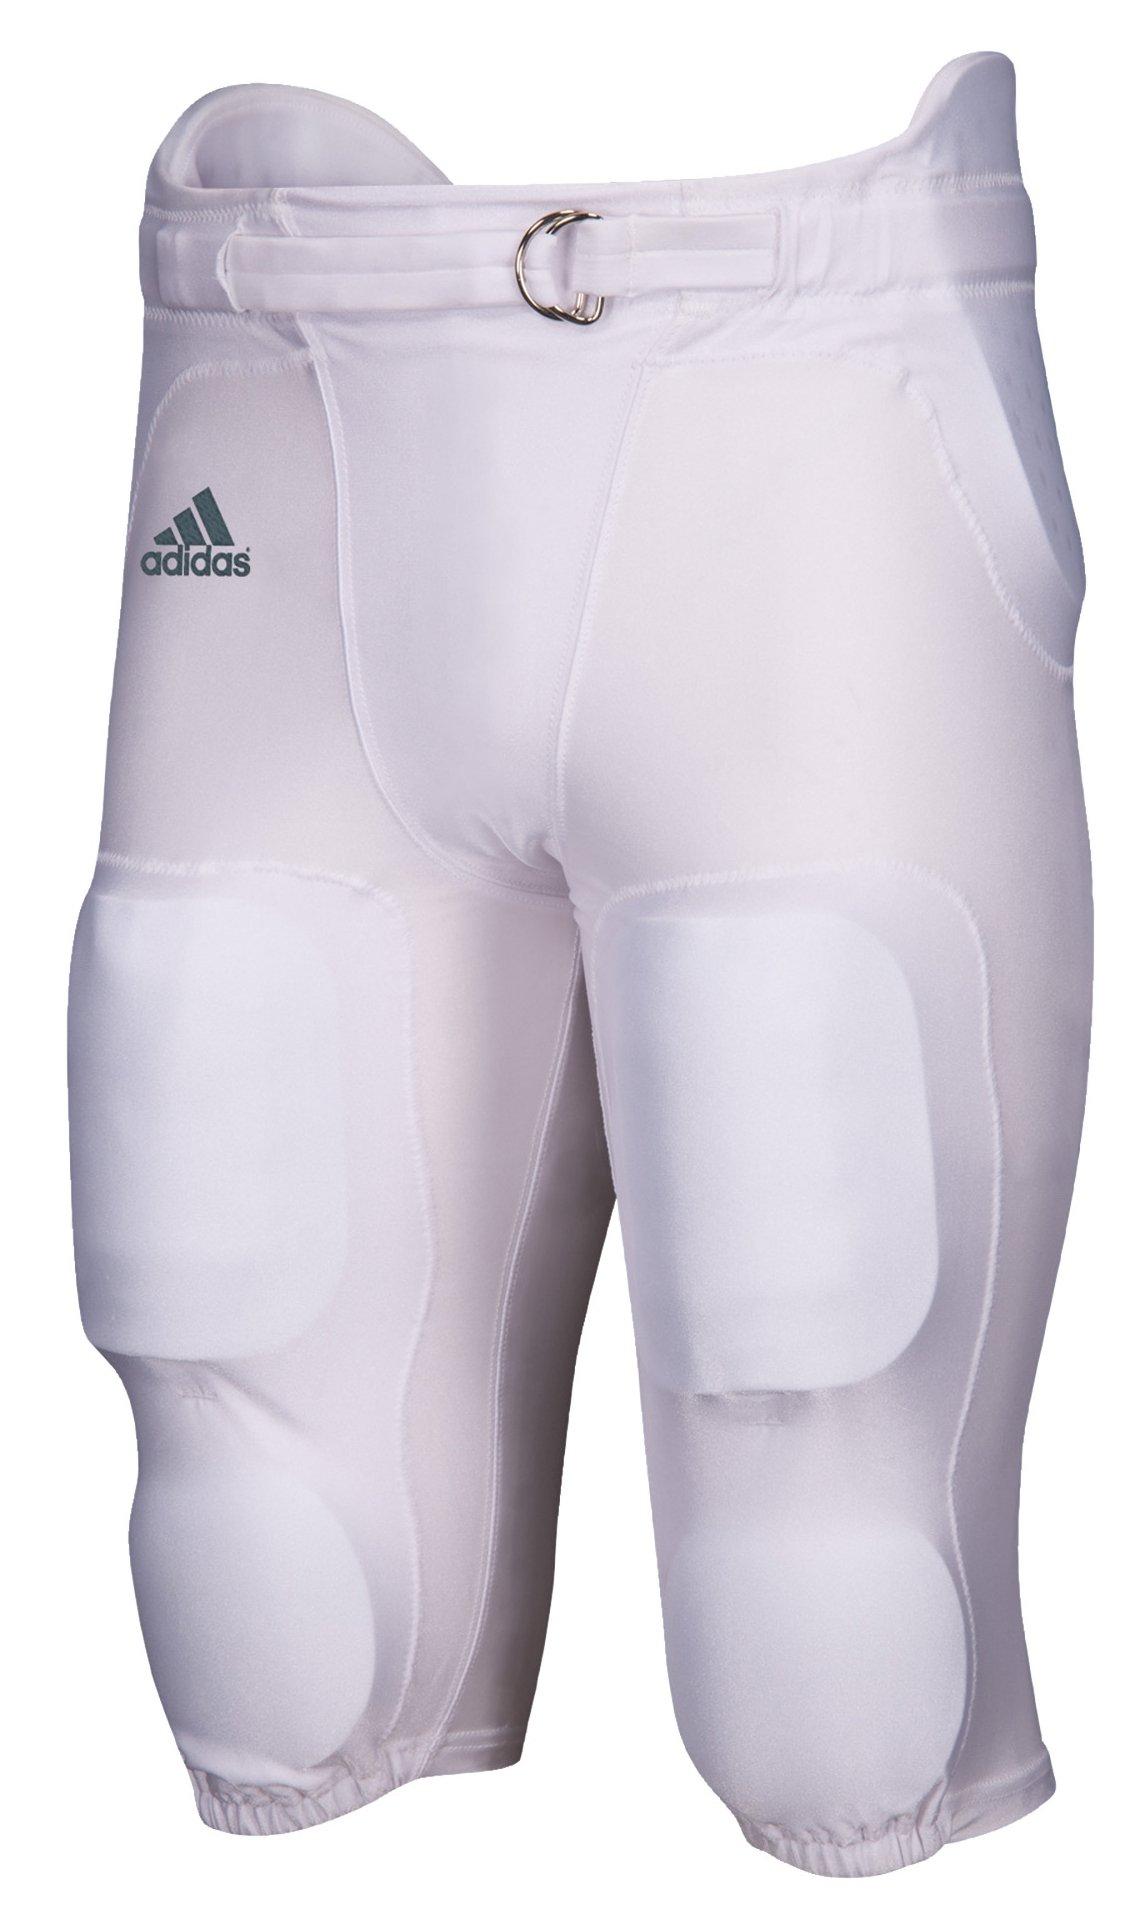 white adidas football pants